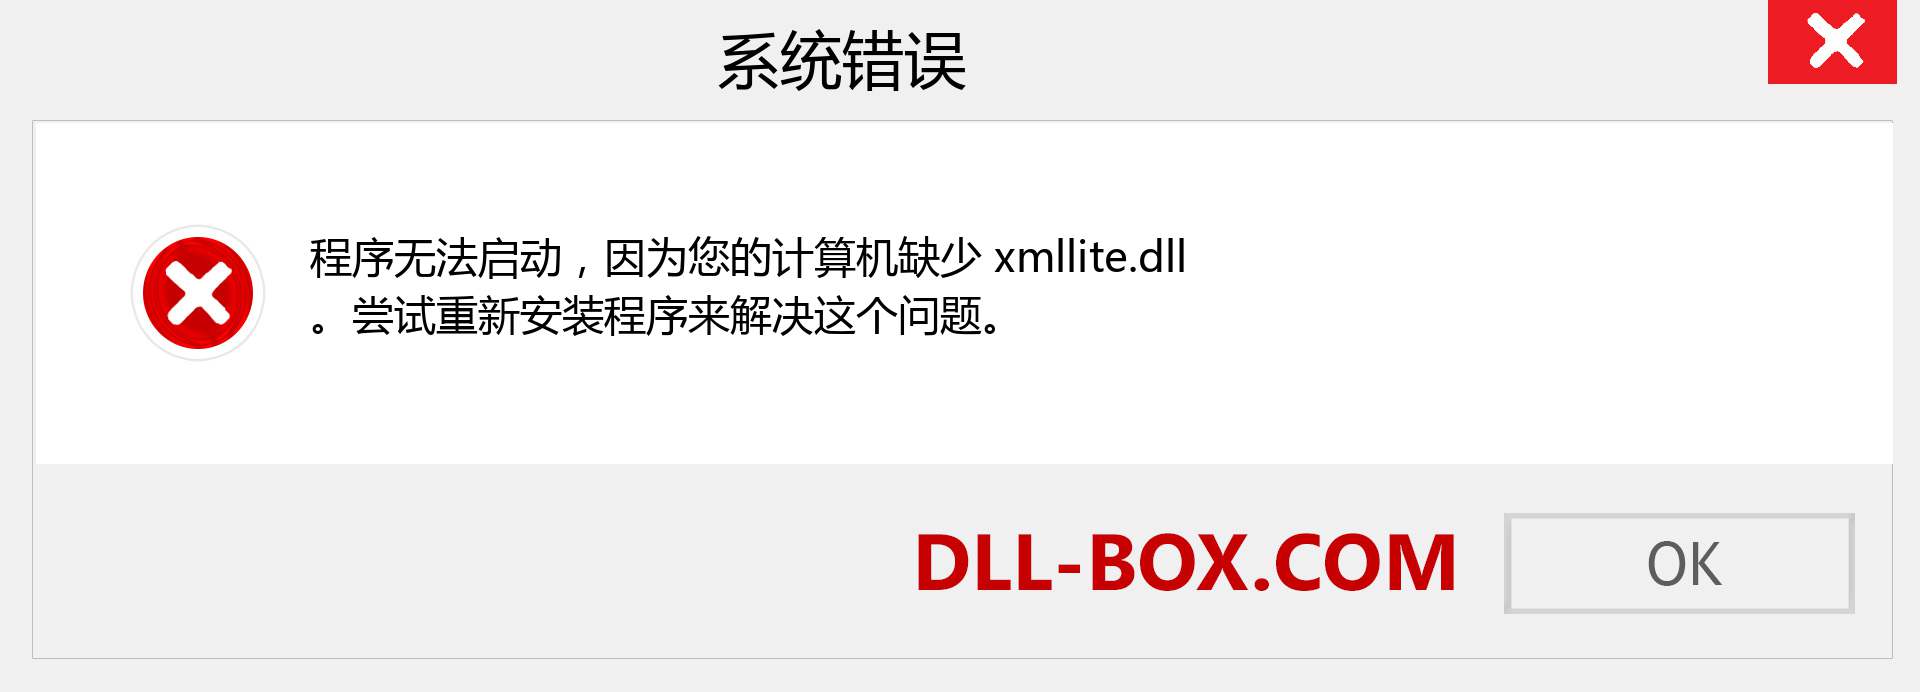 xmllite.dll 文件丢失？。 适用于 Windows 7、8、10 的下载 - 修复 Windows、照片、图像上的 xmllite dll 丢失错误